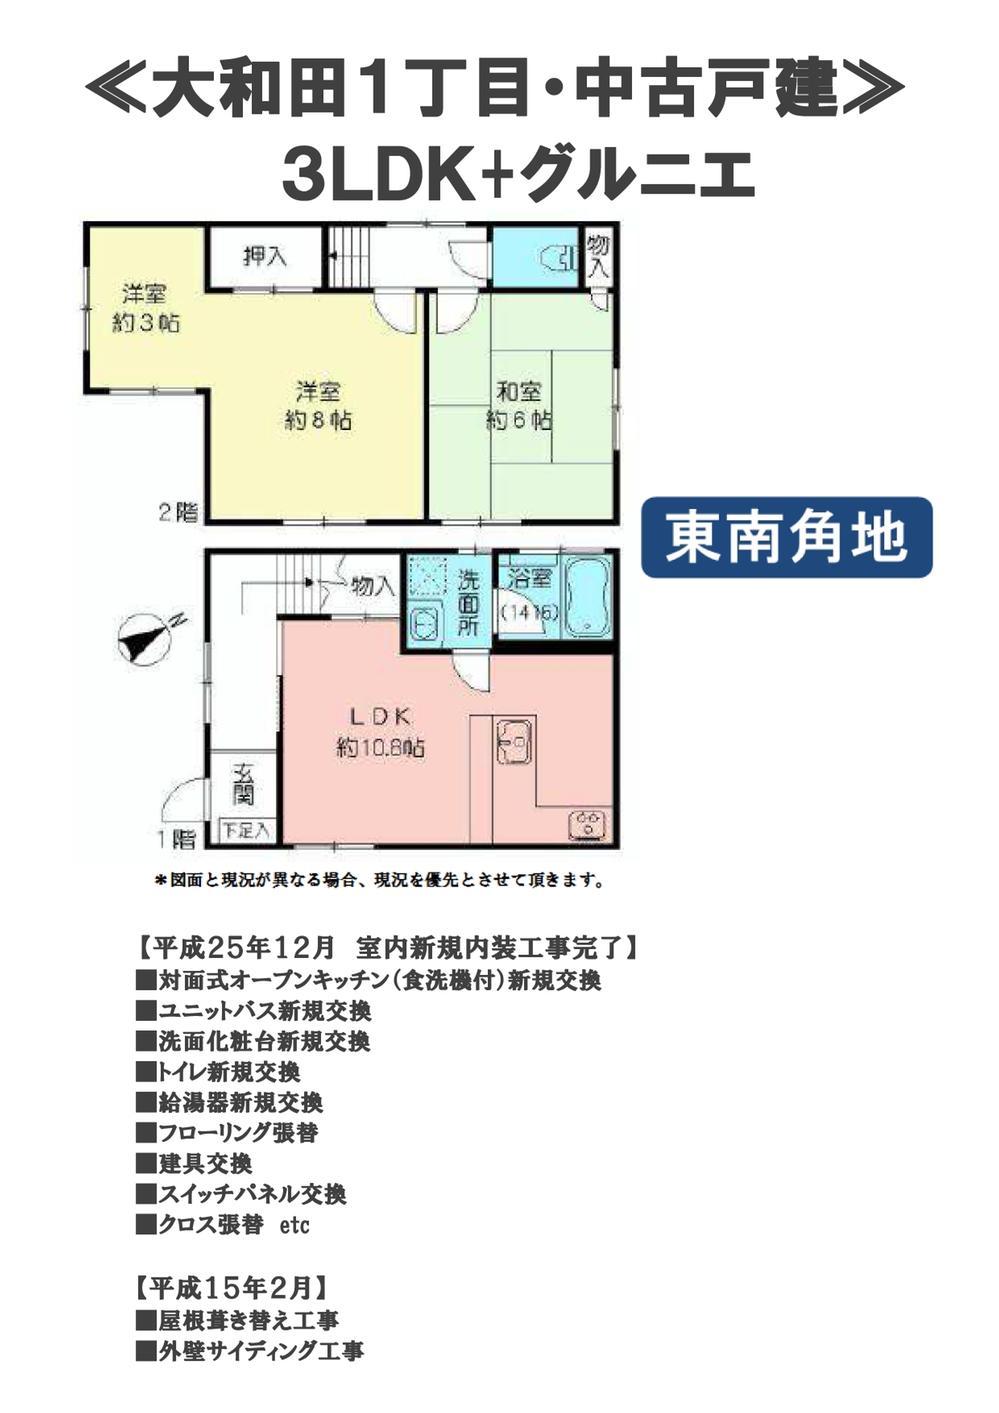 Floor plan. 28,880,000 yen, 3LDK, Land area 49.61 sq m , Building area 62.79 sq m